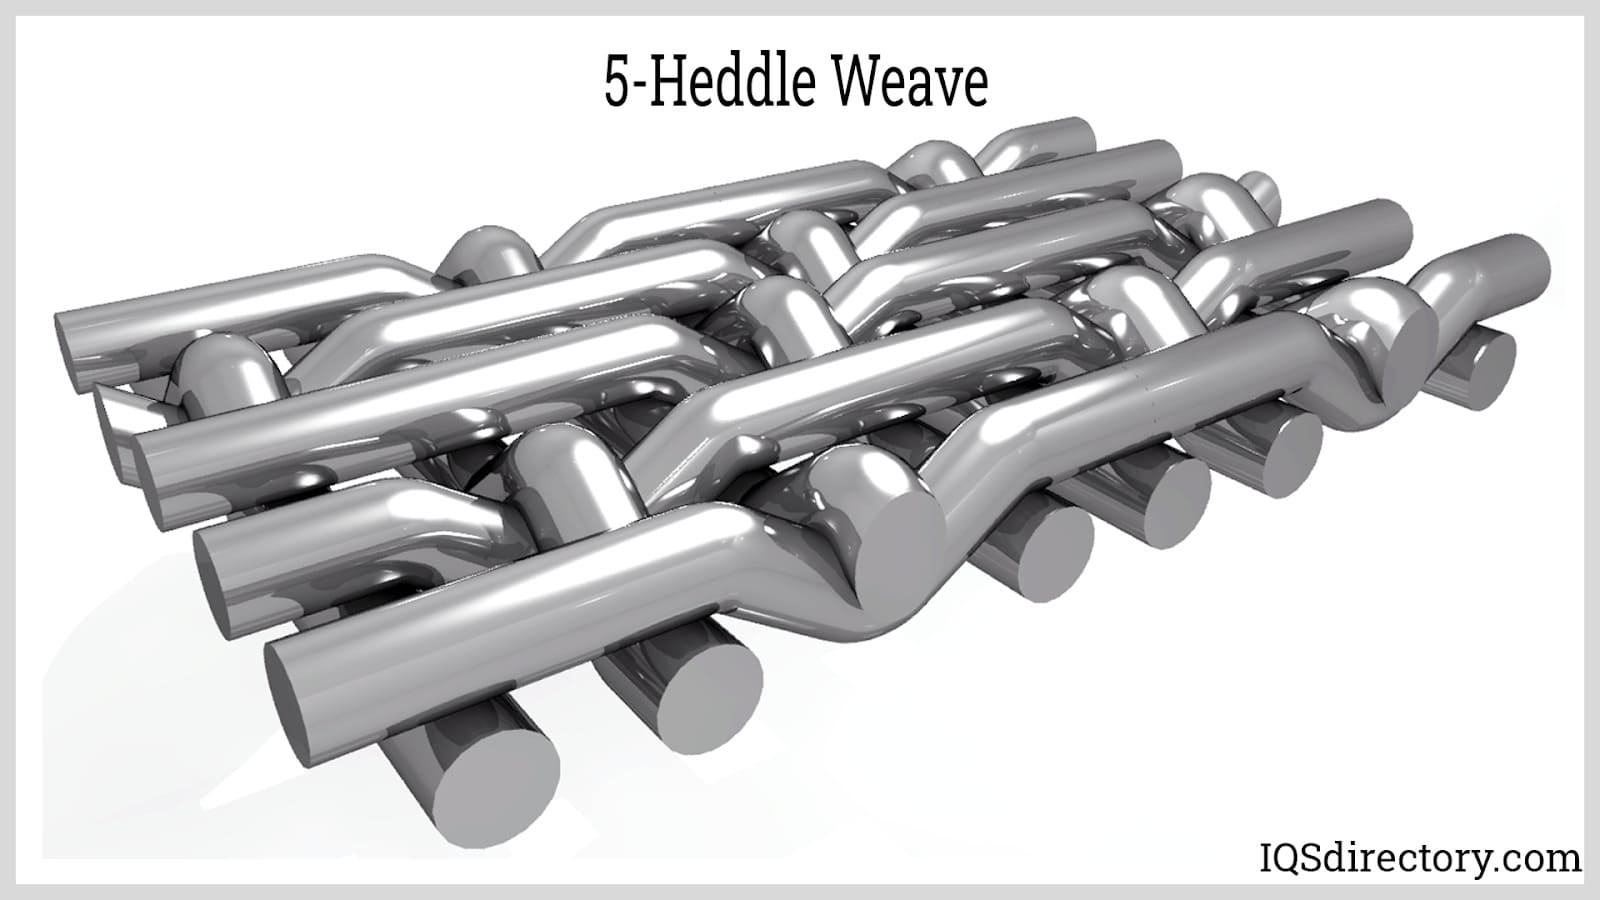 5-Heddle Weave